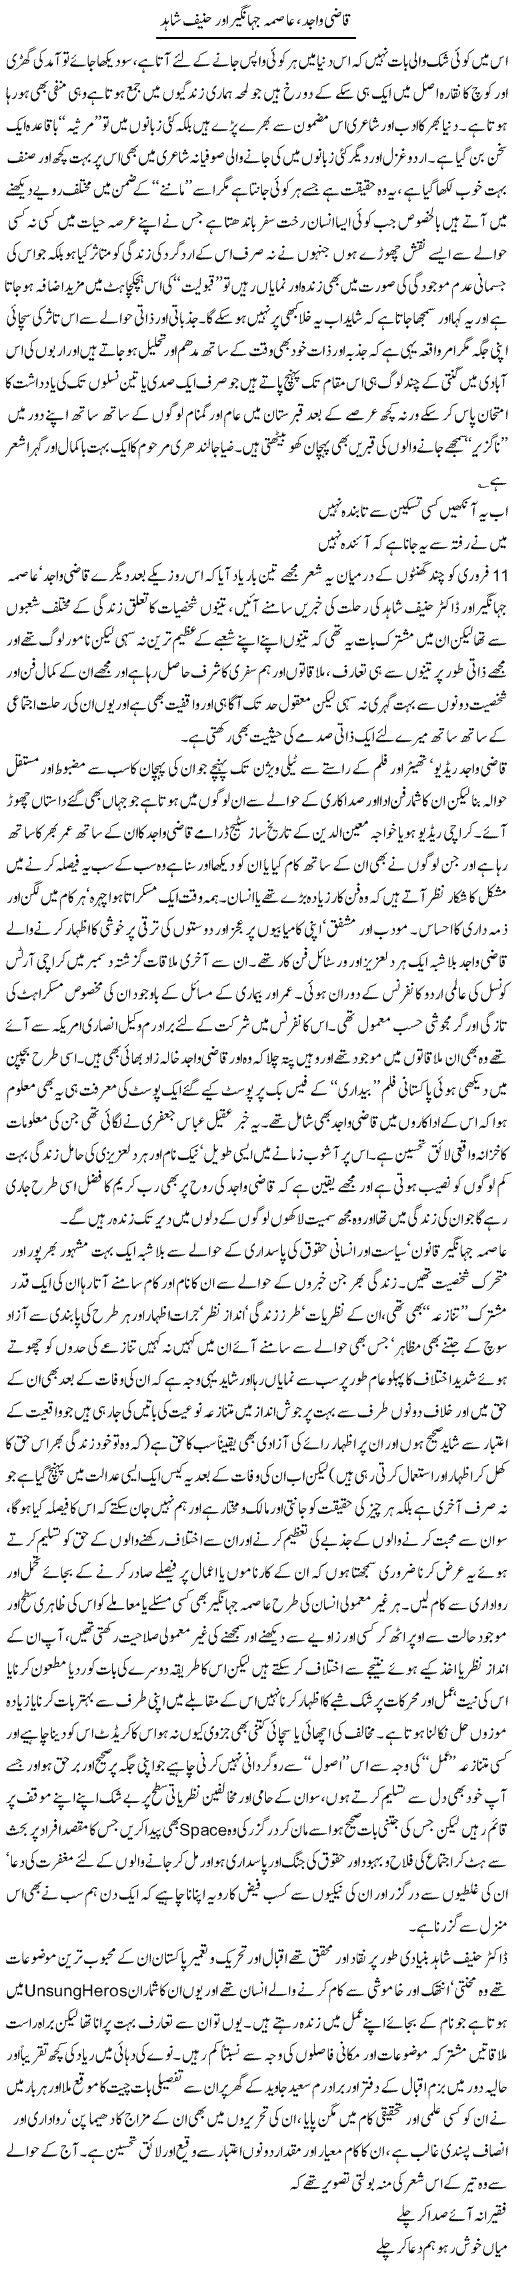 Qazi Wajid, Asma Jahangir Aur Hanif Shahid | Amjad Islam Amjad | Daily Urdu Columns